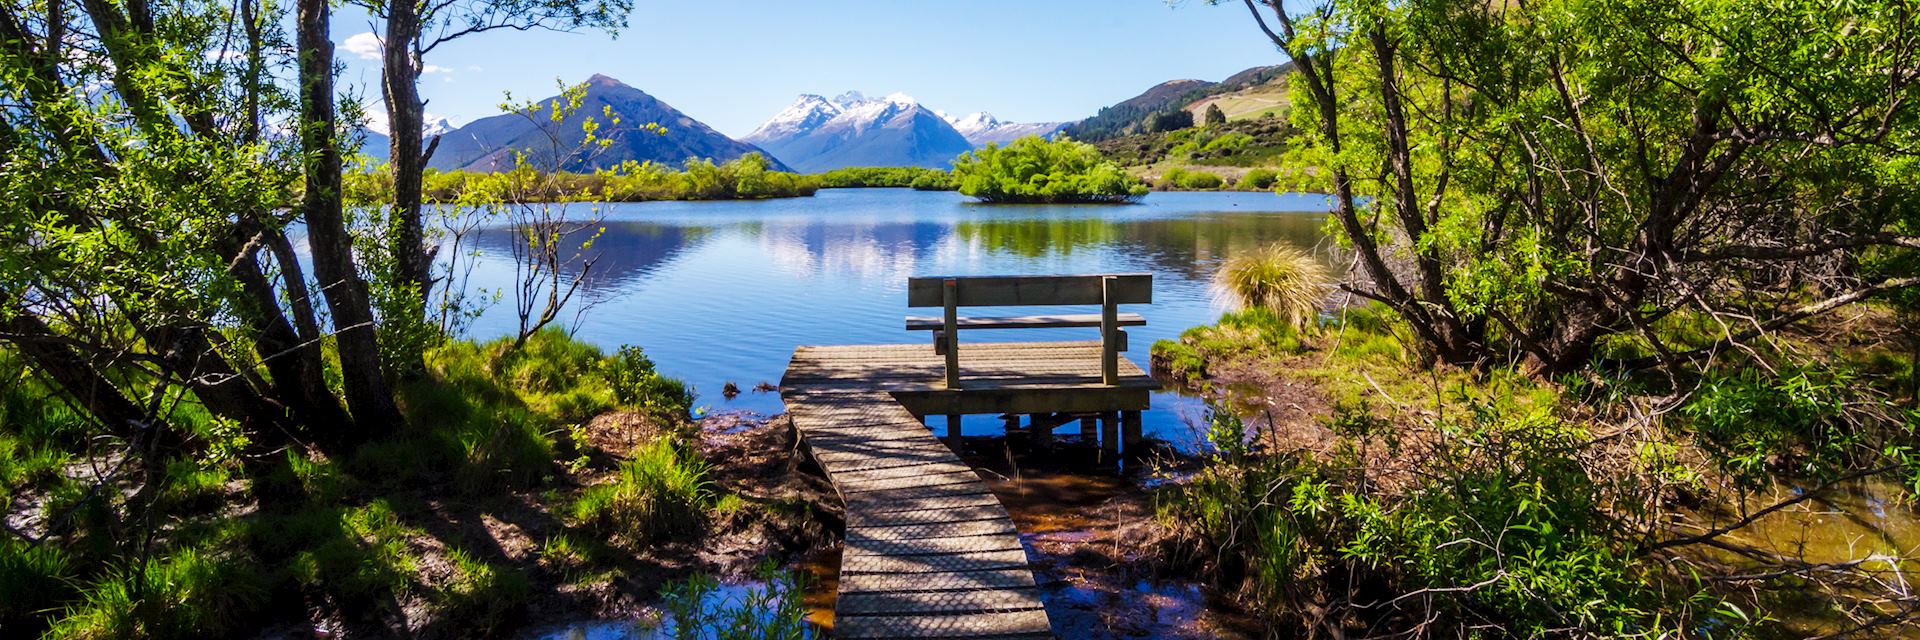 Glenorchy Lagoon, New Zealand